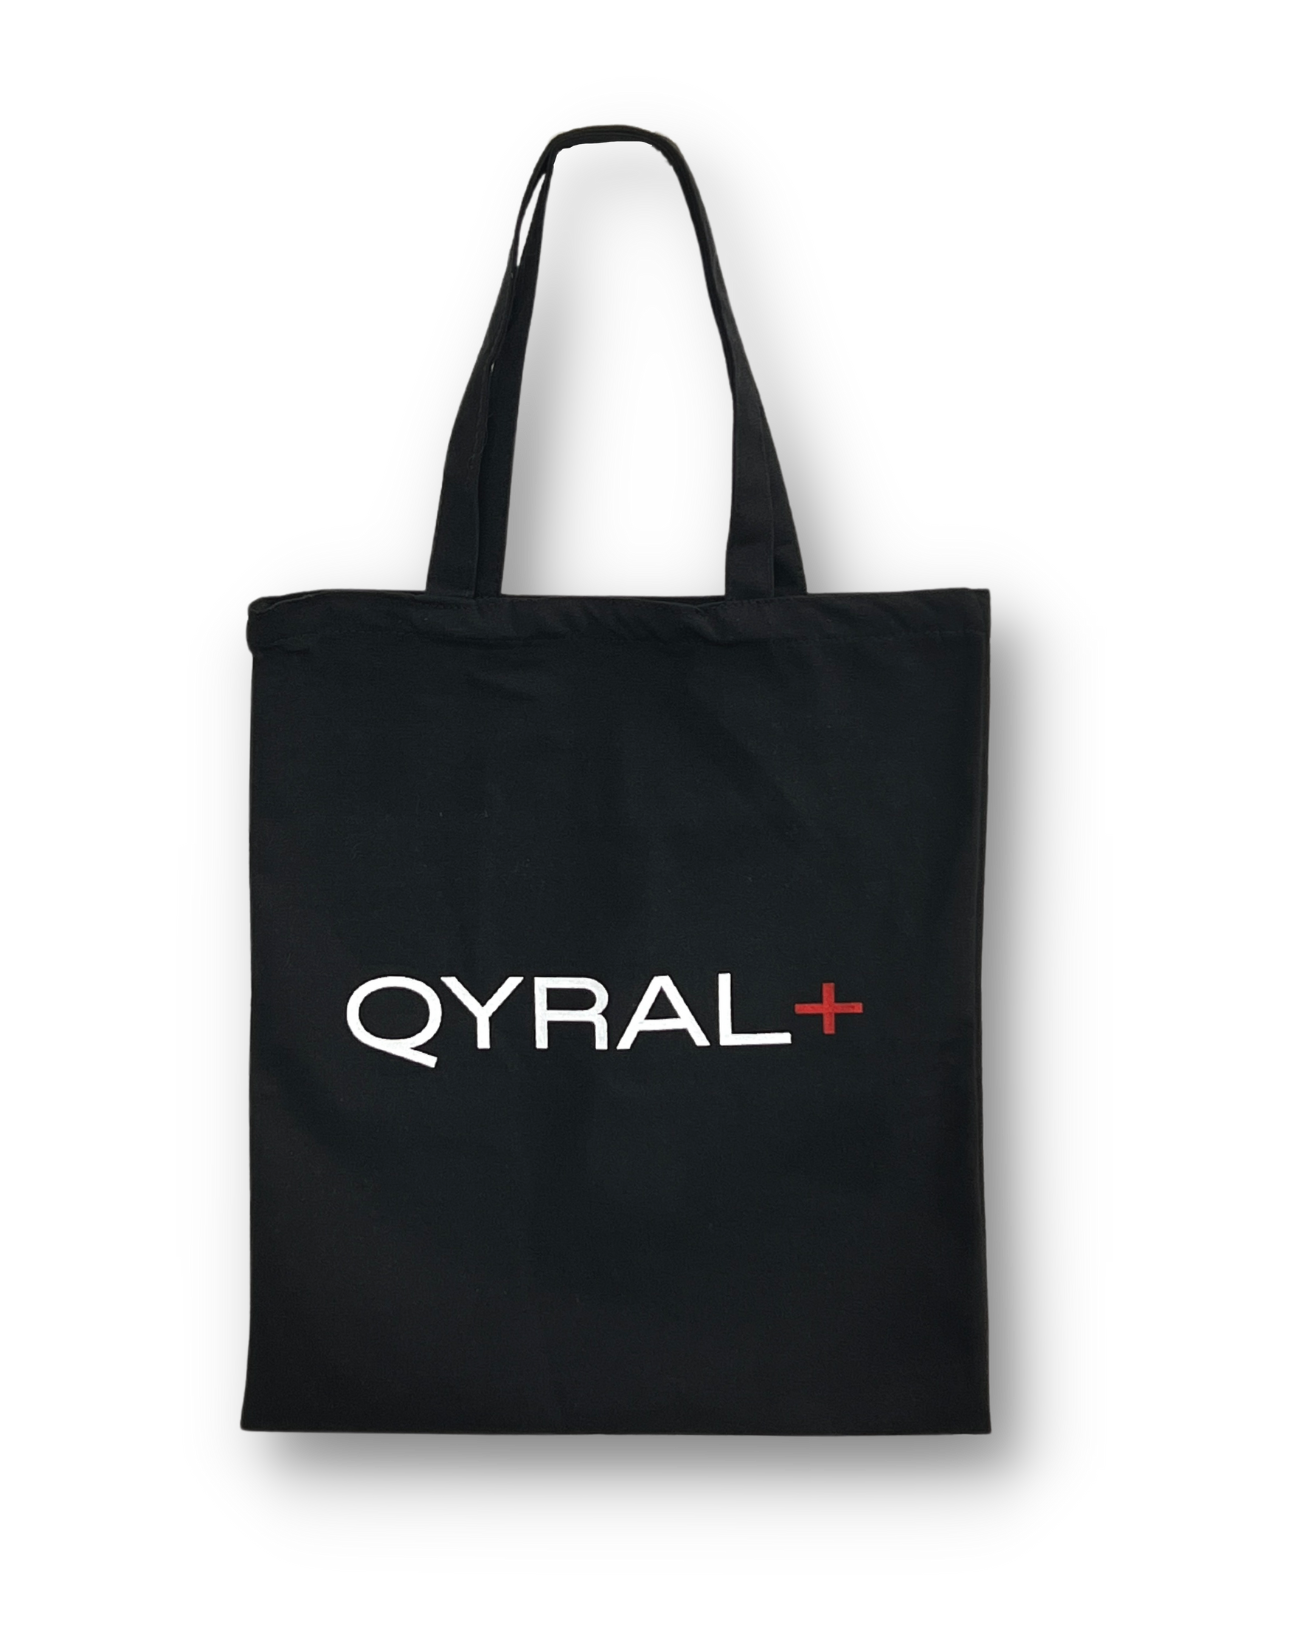 Qyral+ Tote Bag